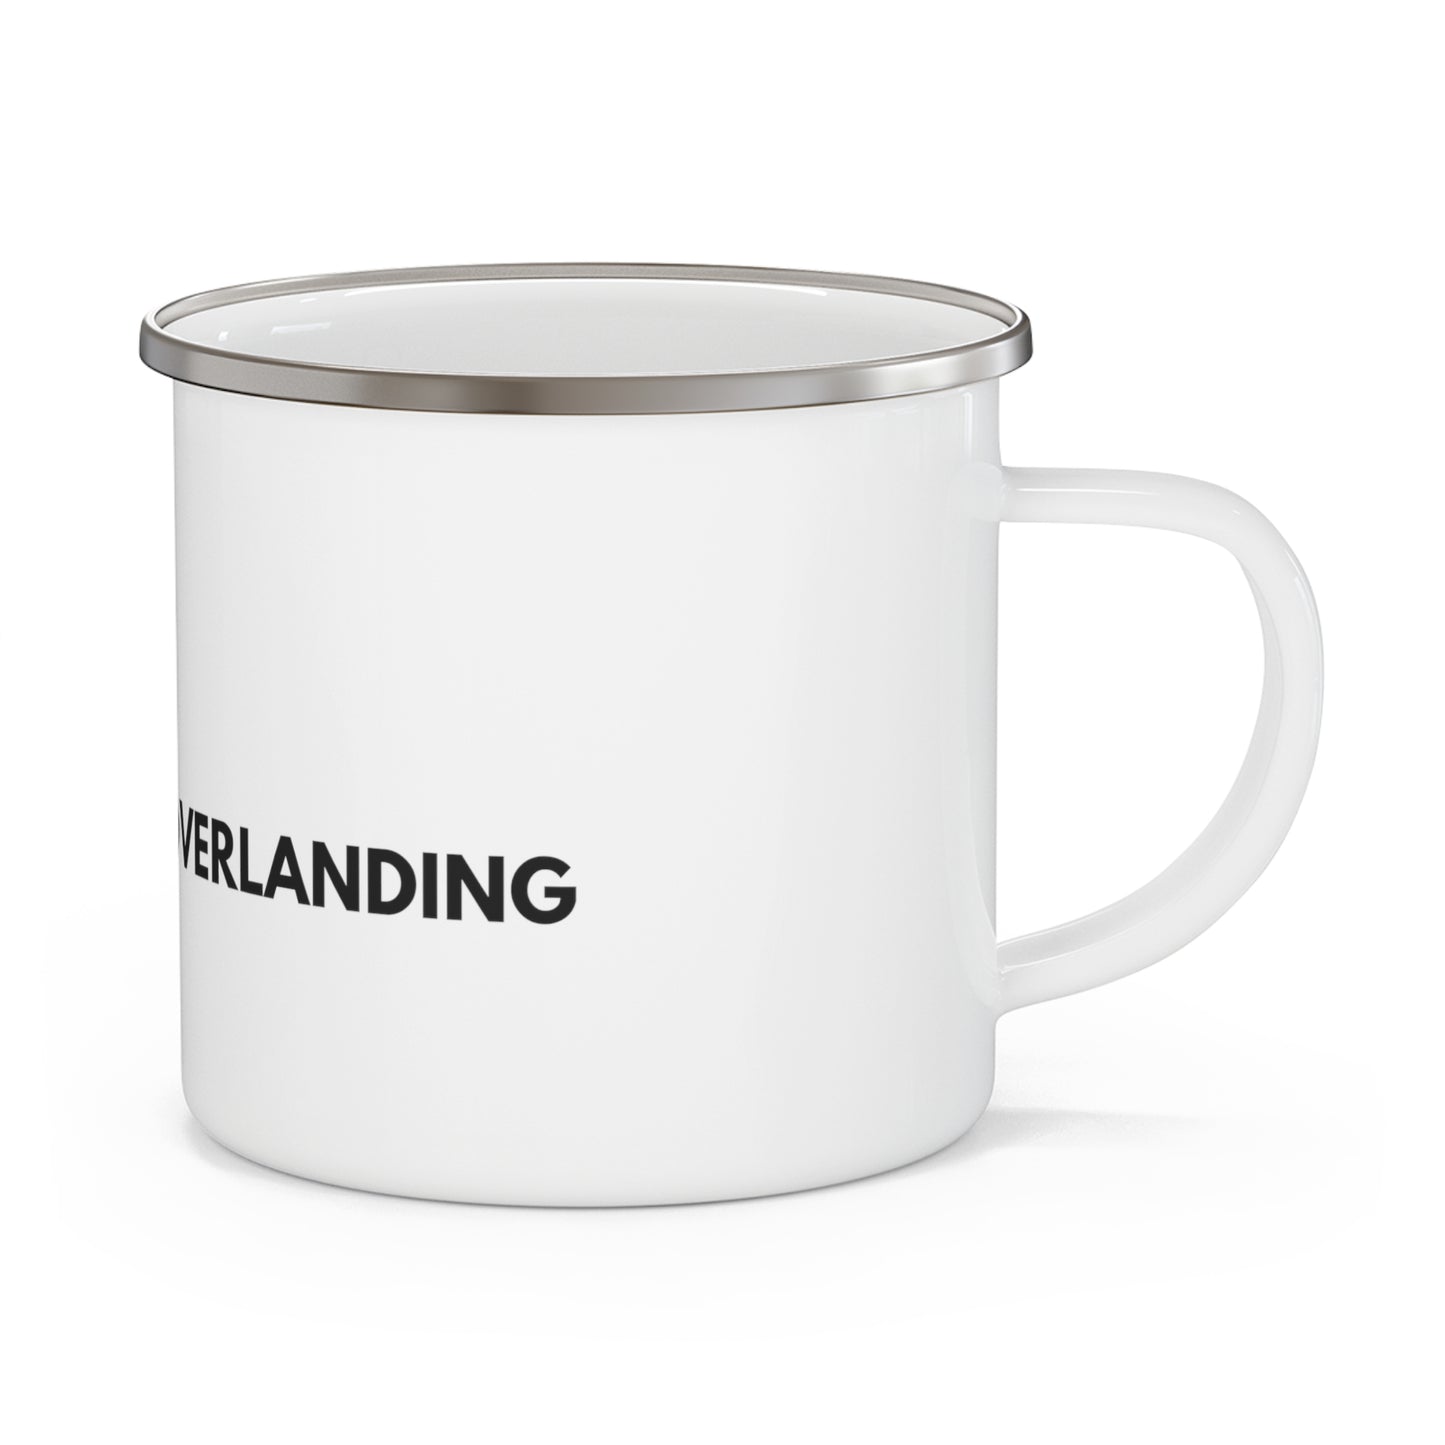 Overlanding Camping Mug